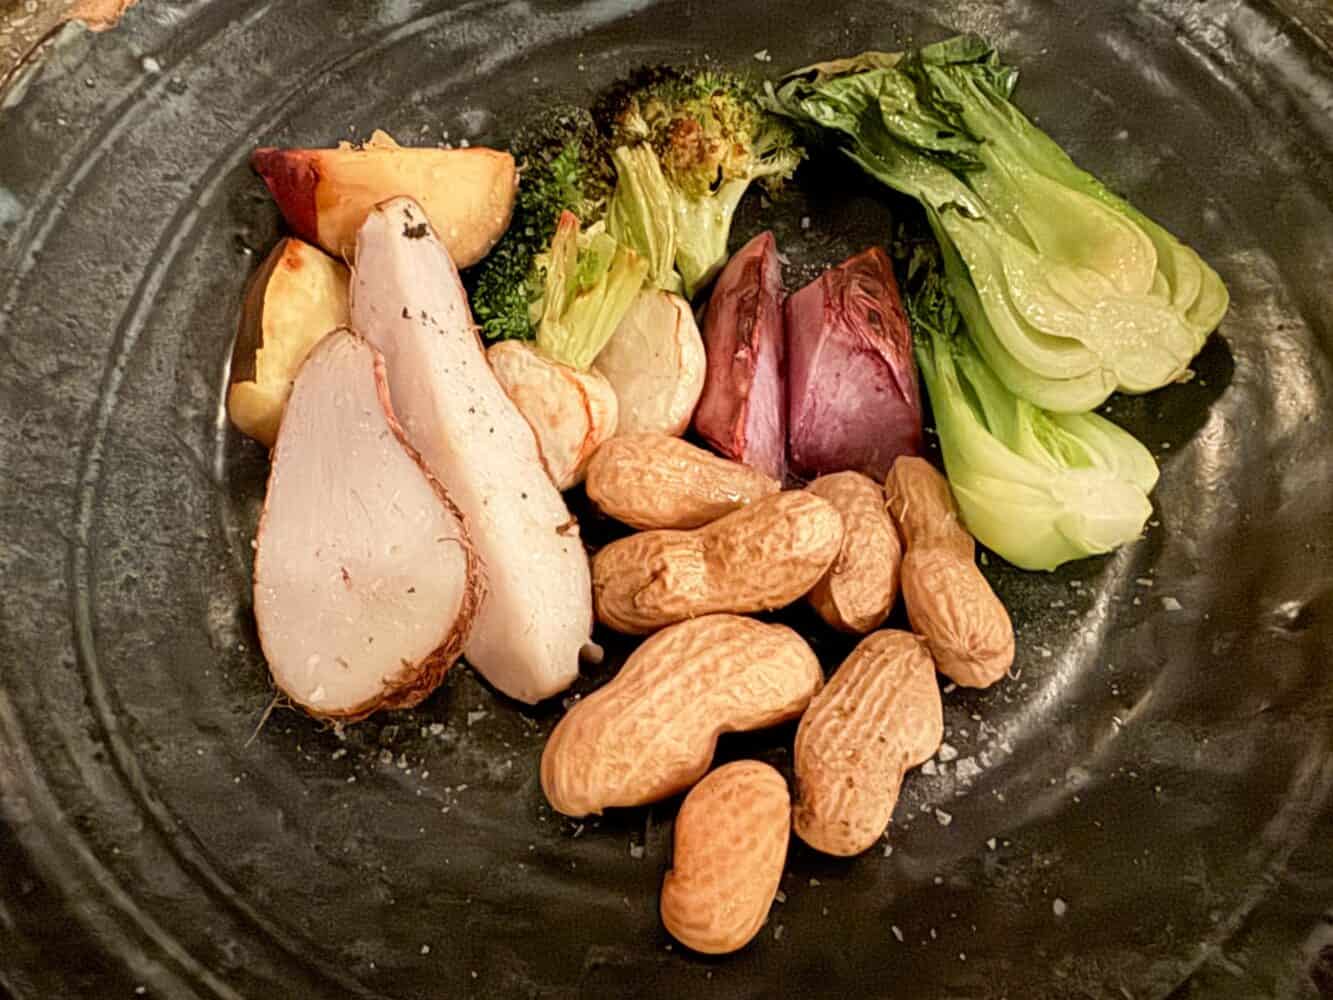 Roast vegetables as part of the Tasting Menu at Monk Restaurant, Kyoto, Japan